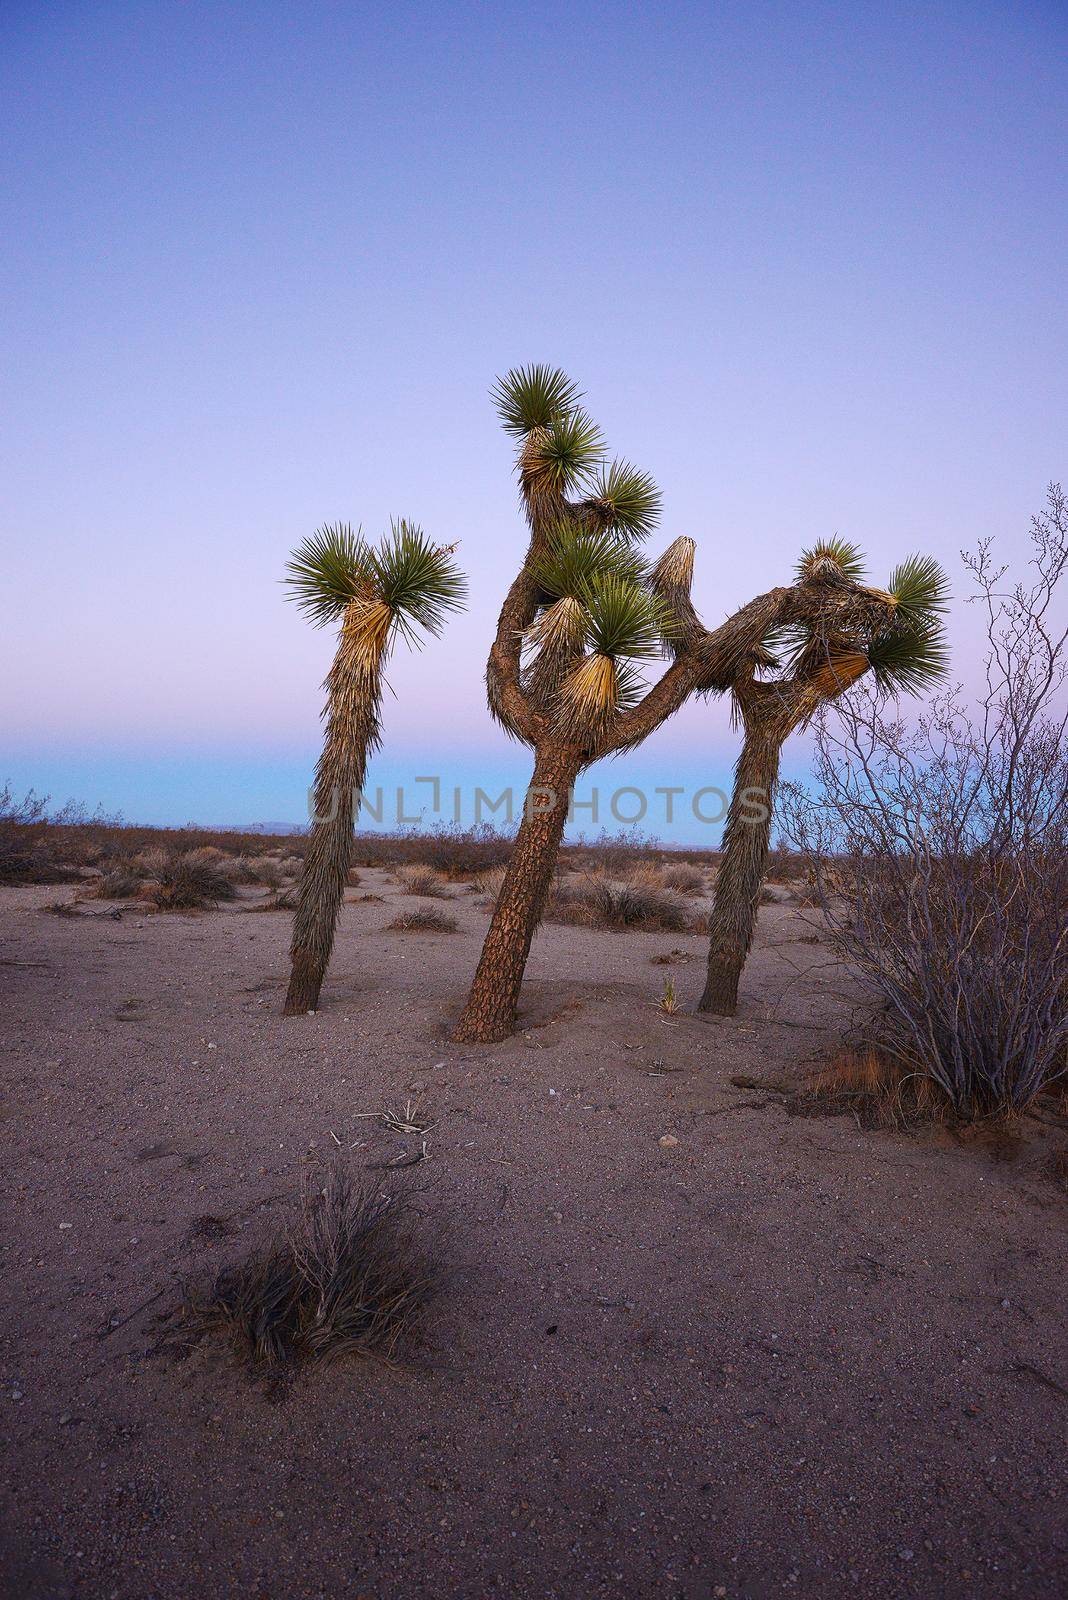 Joshua tree in california desert